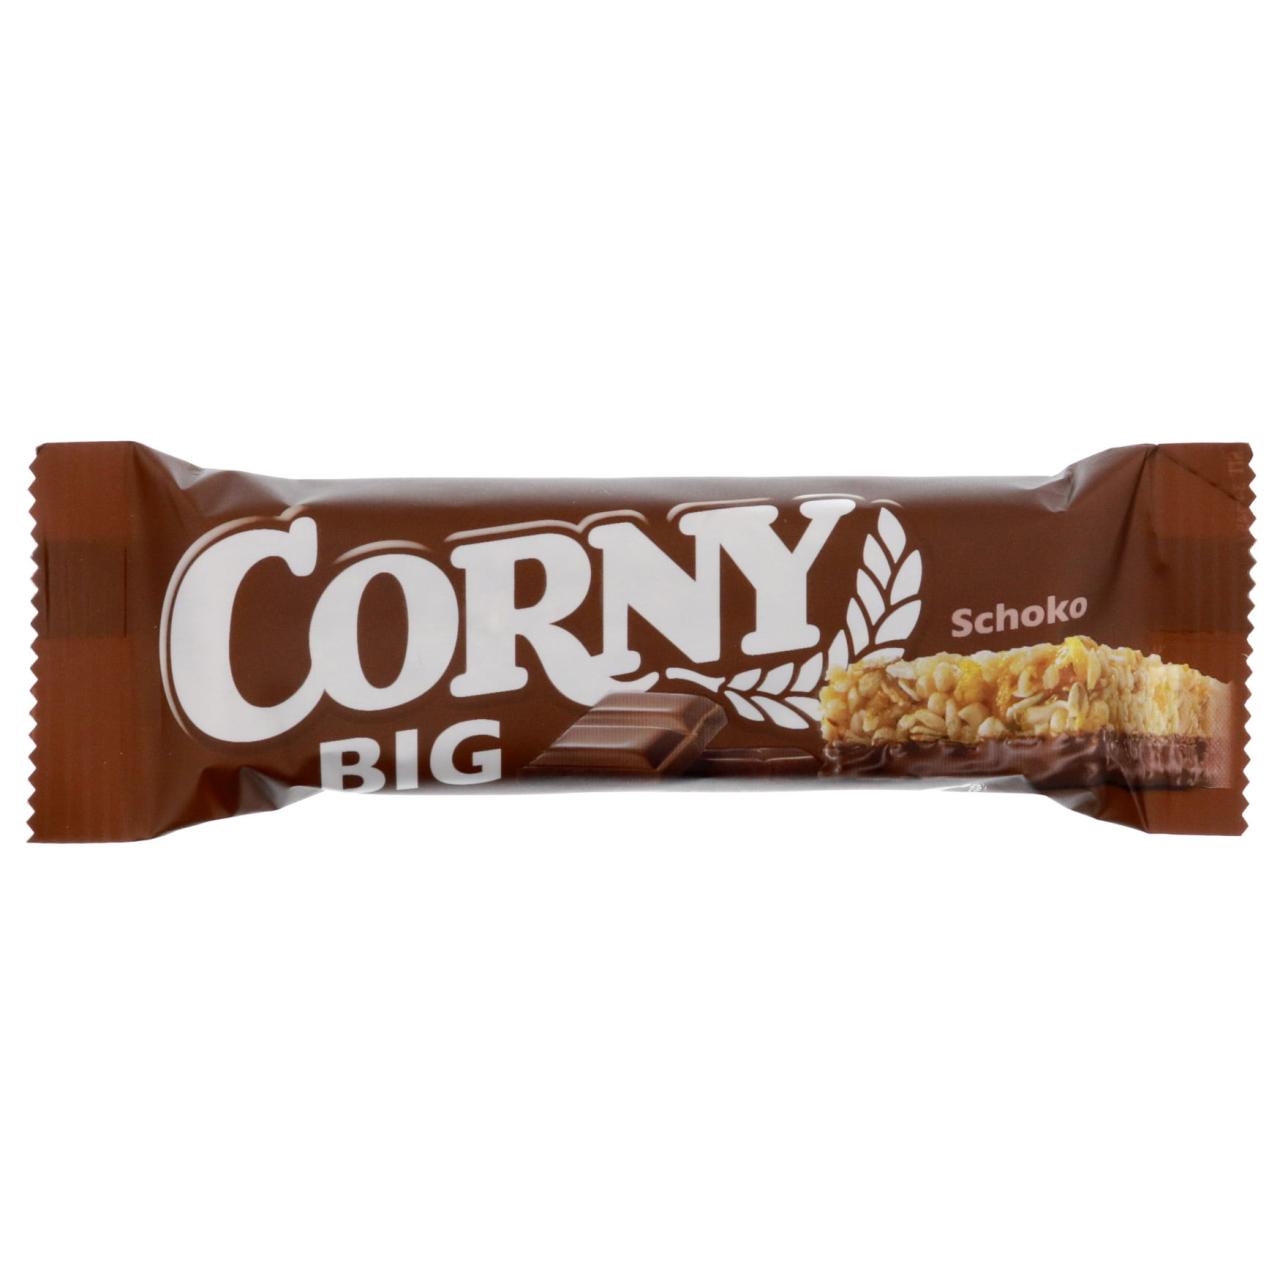 Corny Big Chokolade 50g